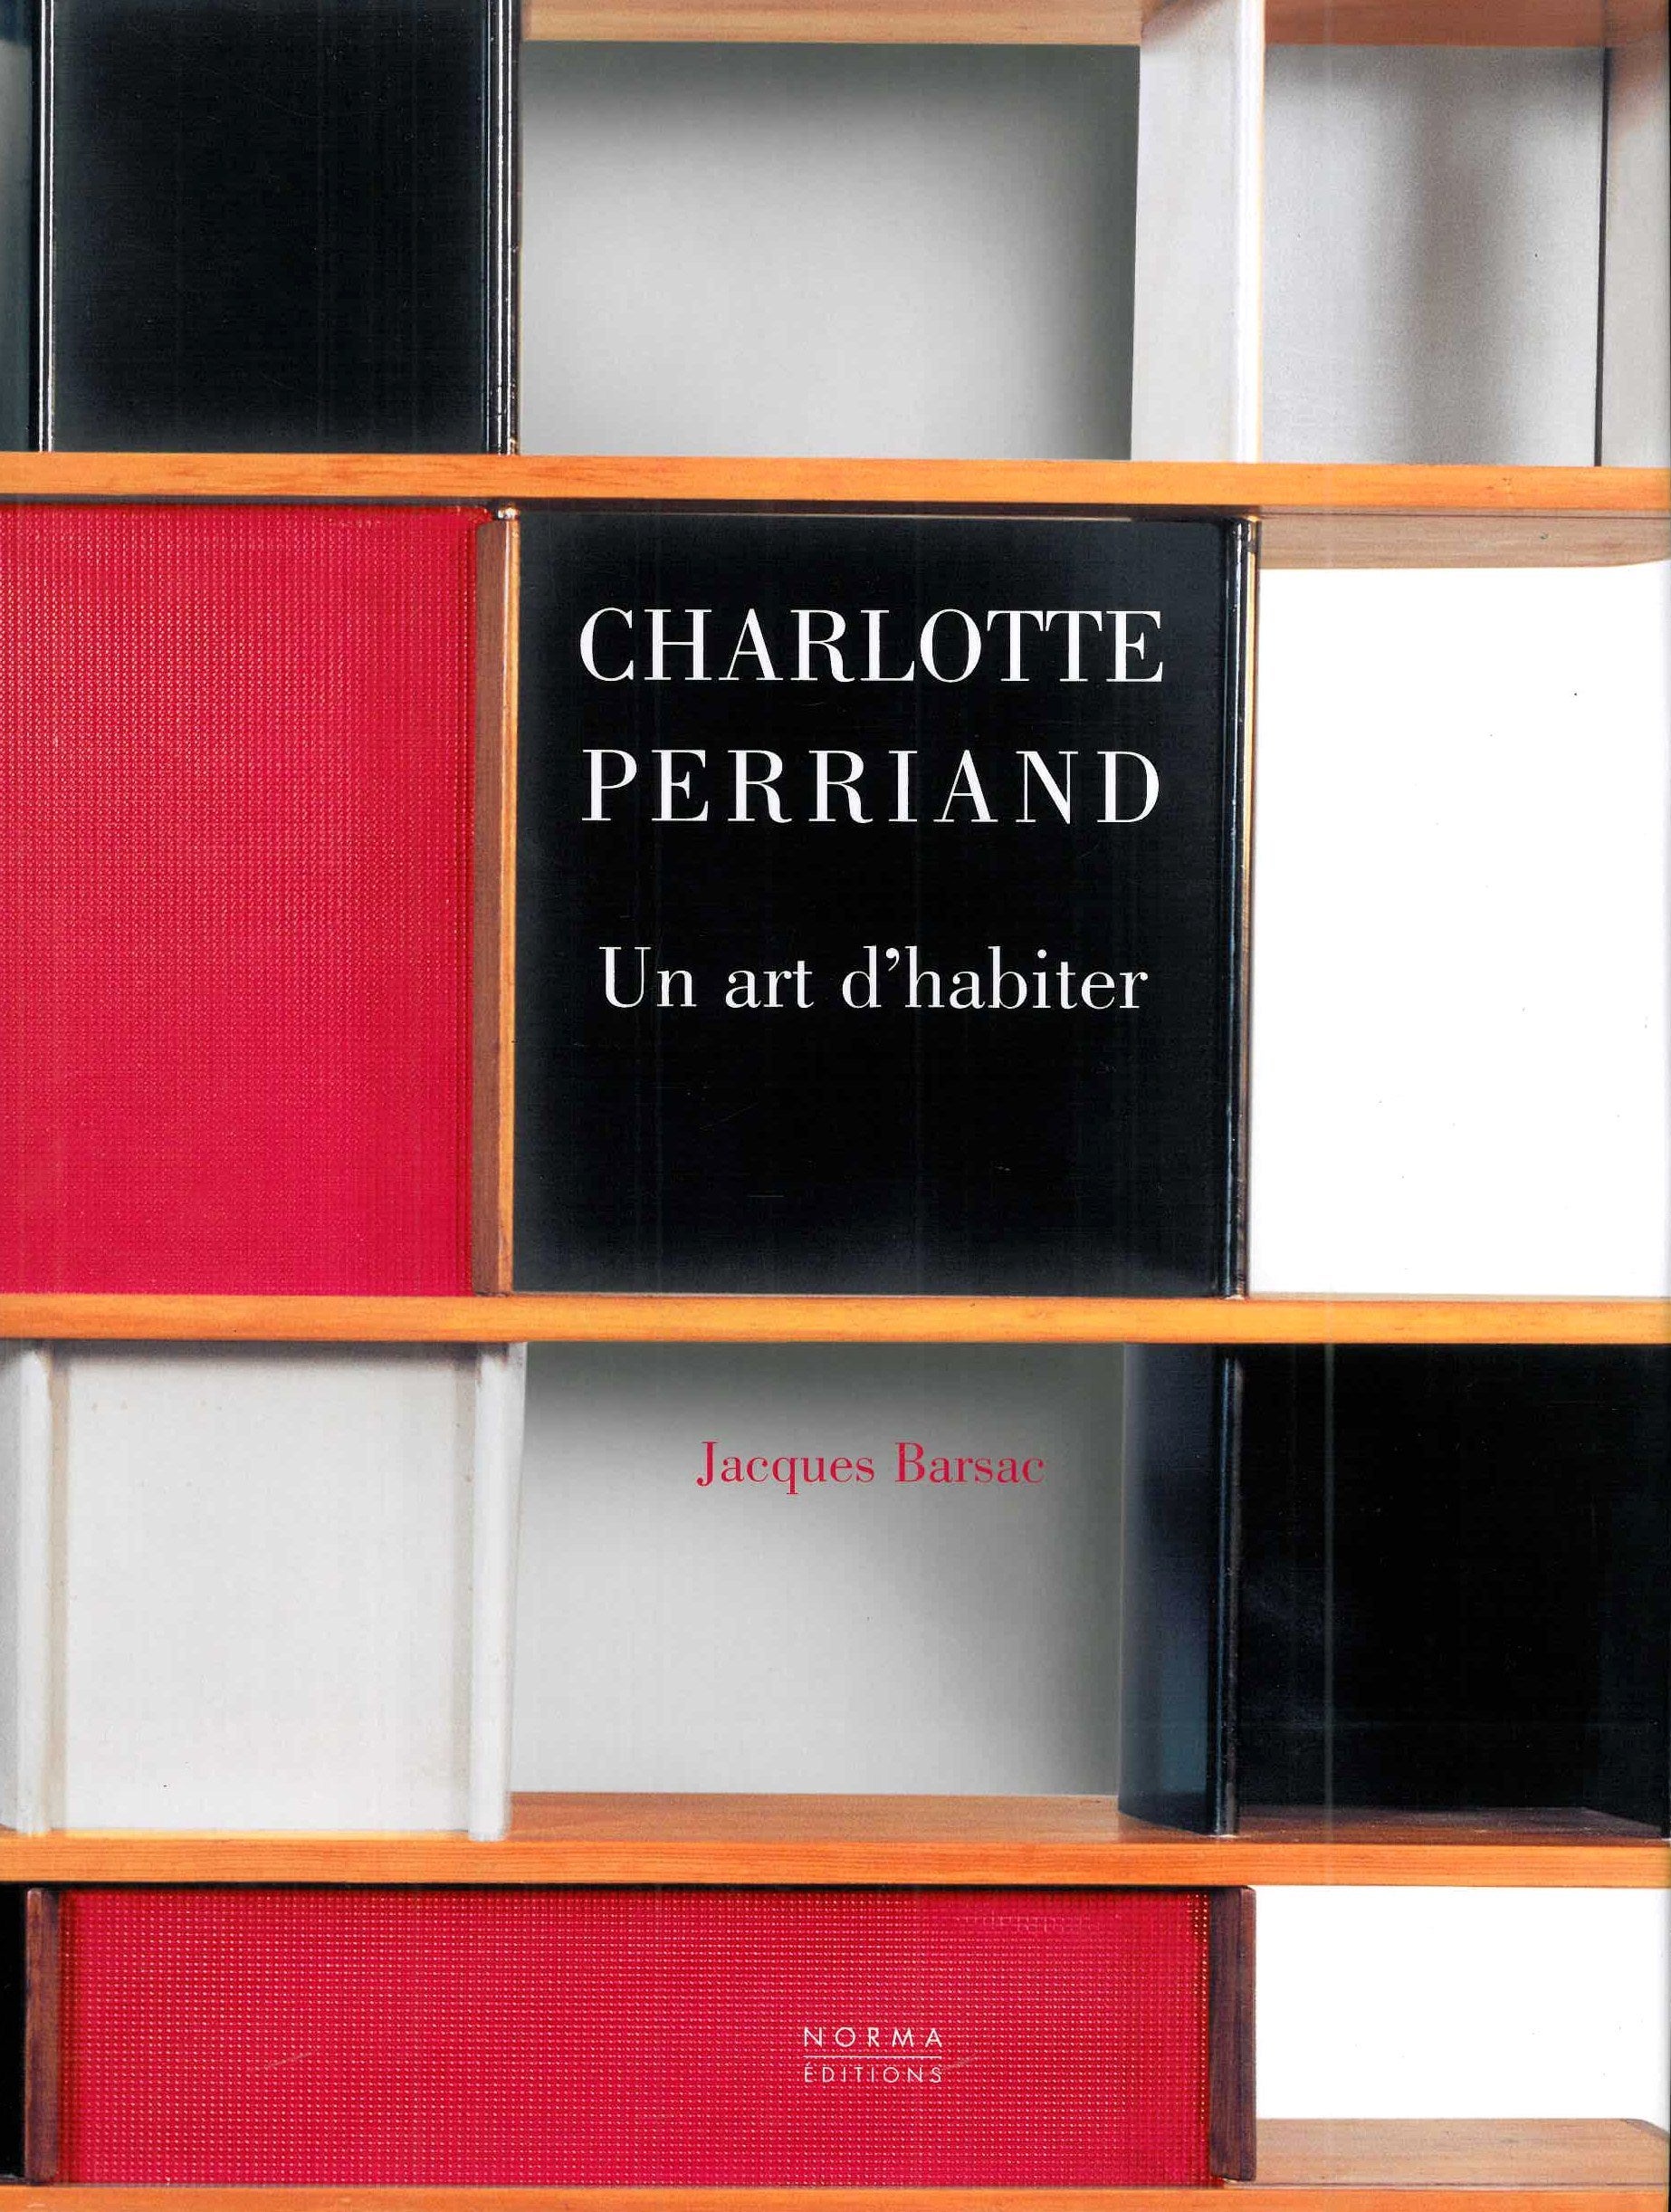 Charlotte Perriand